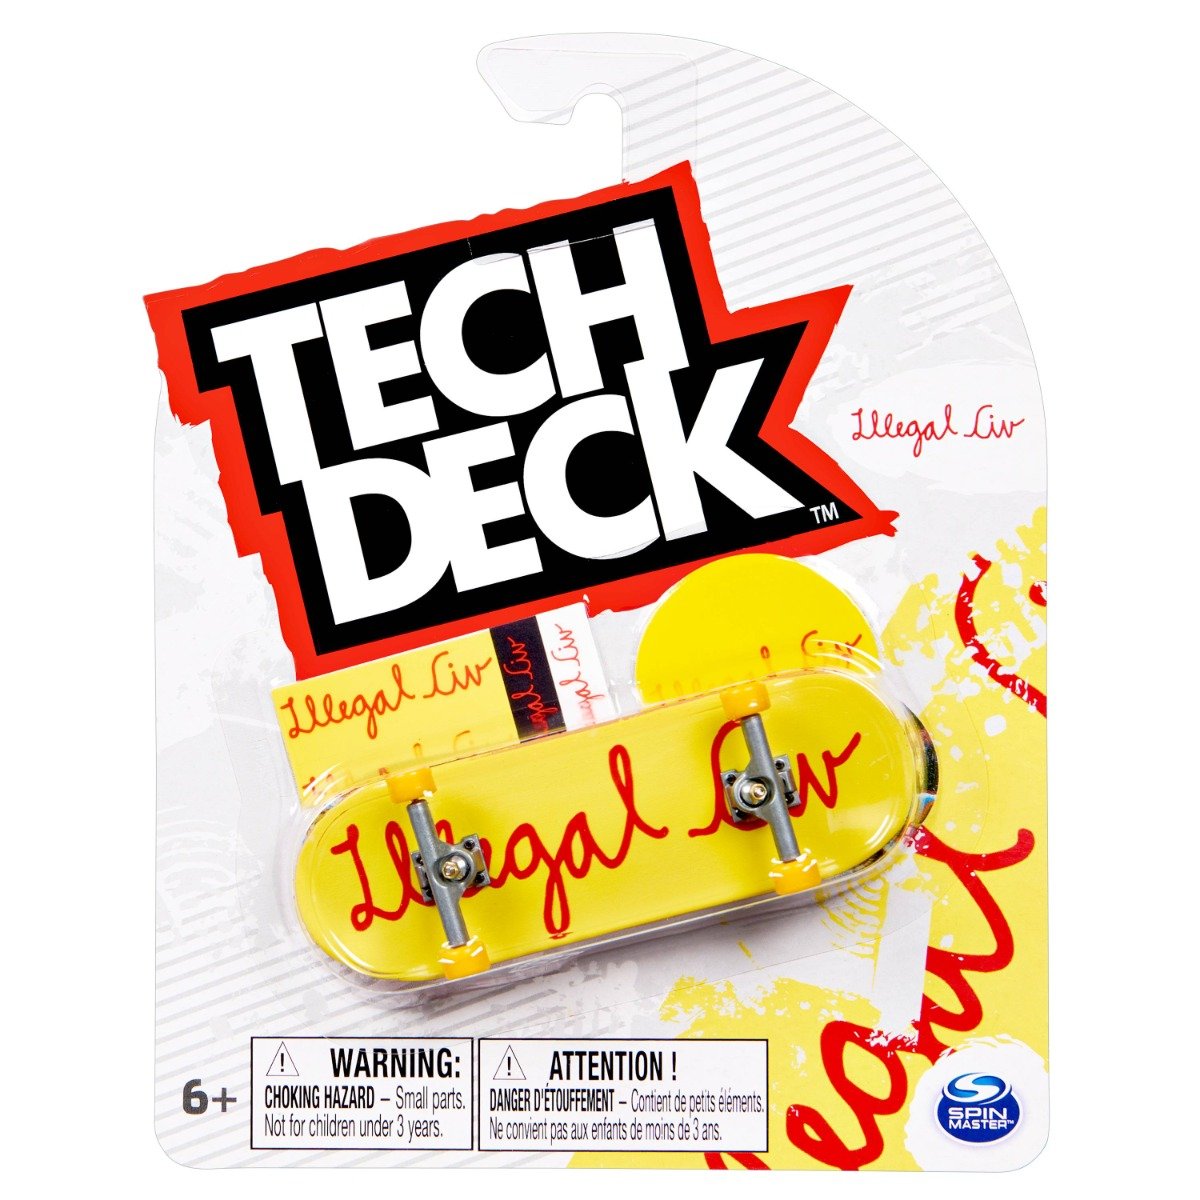 Mini placa skateboard Tech Deck, Illegal Civ, 20140767